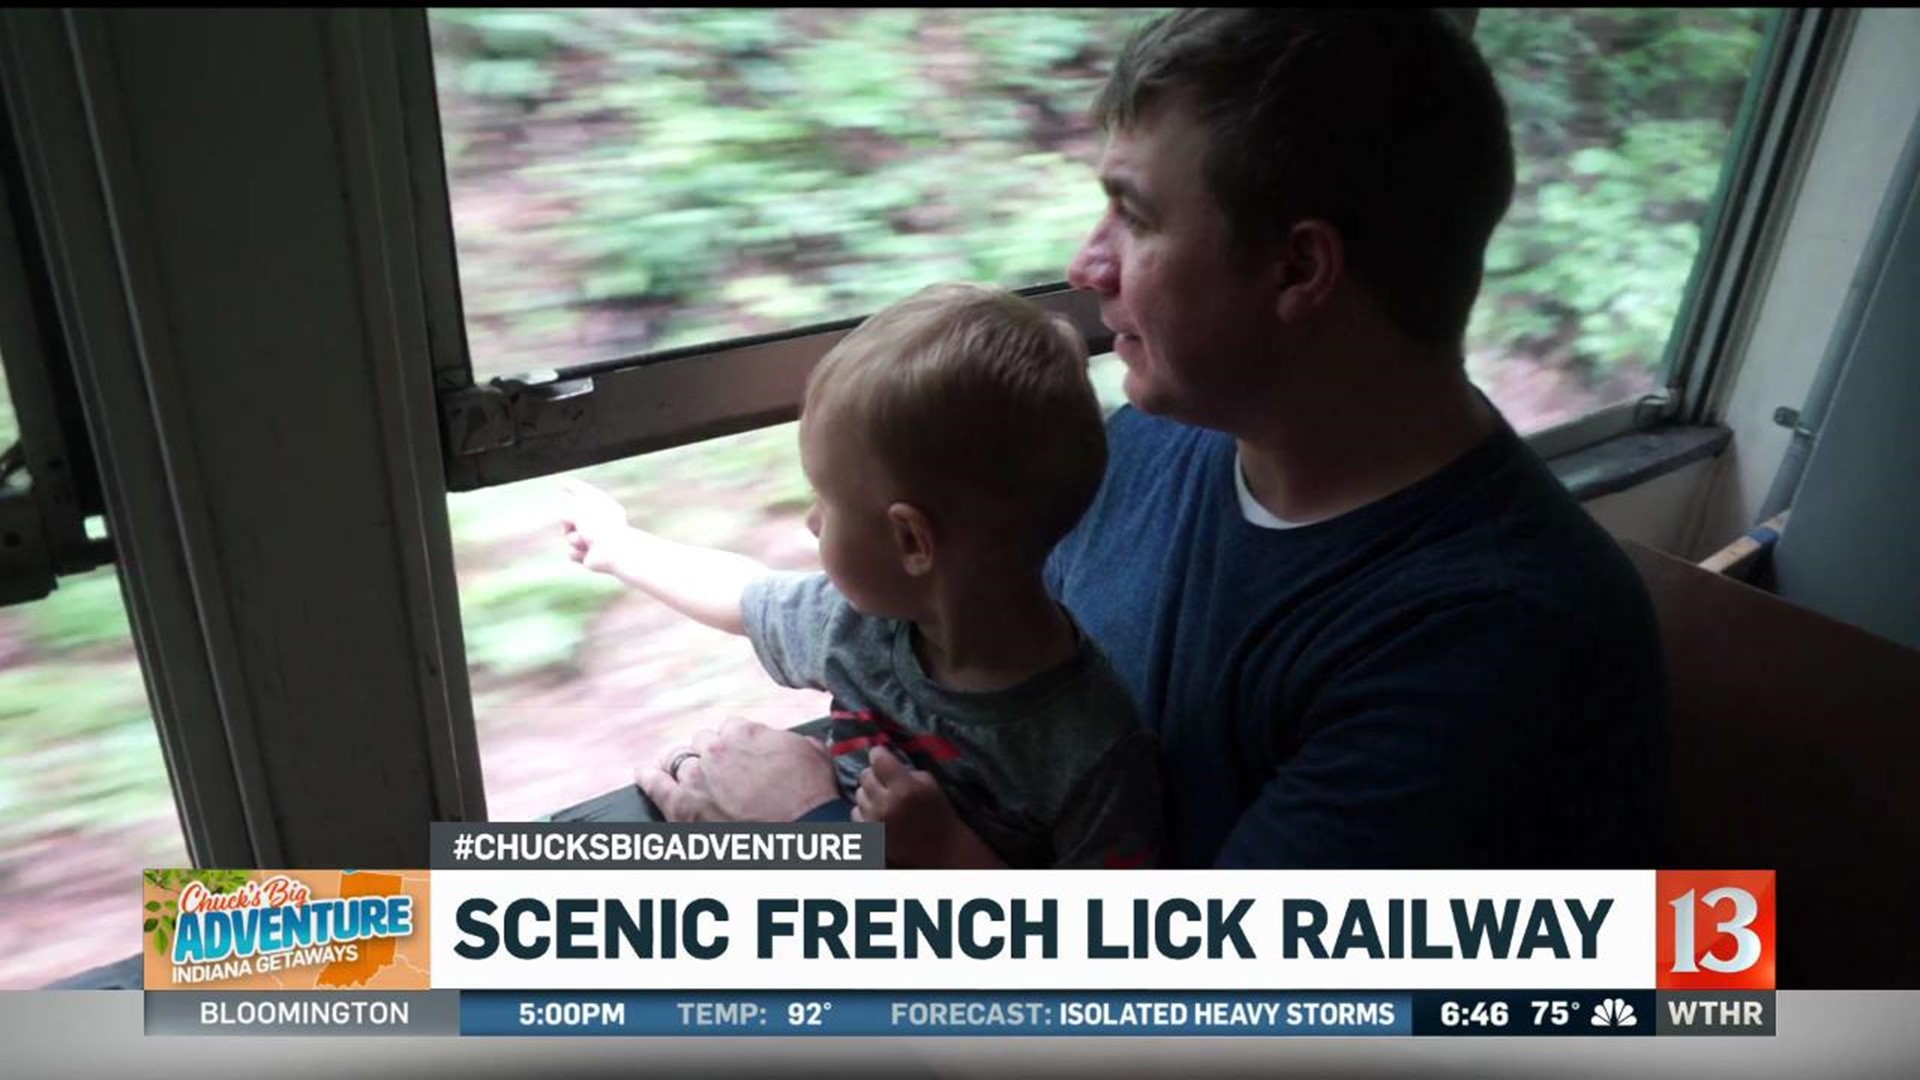 French Lick scenic railway